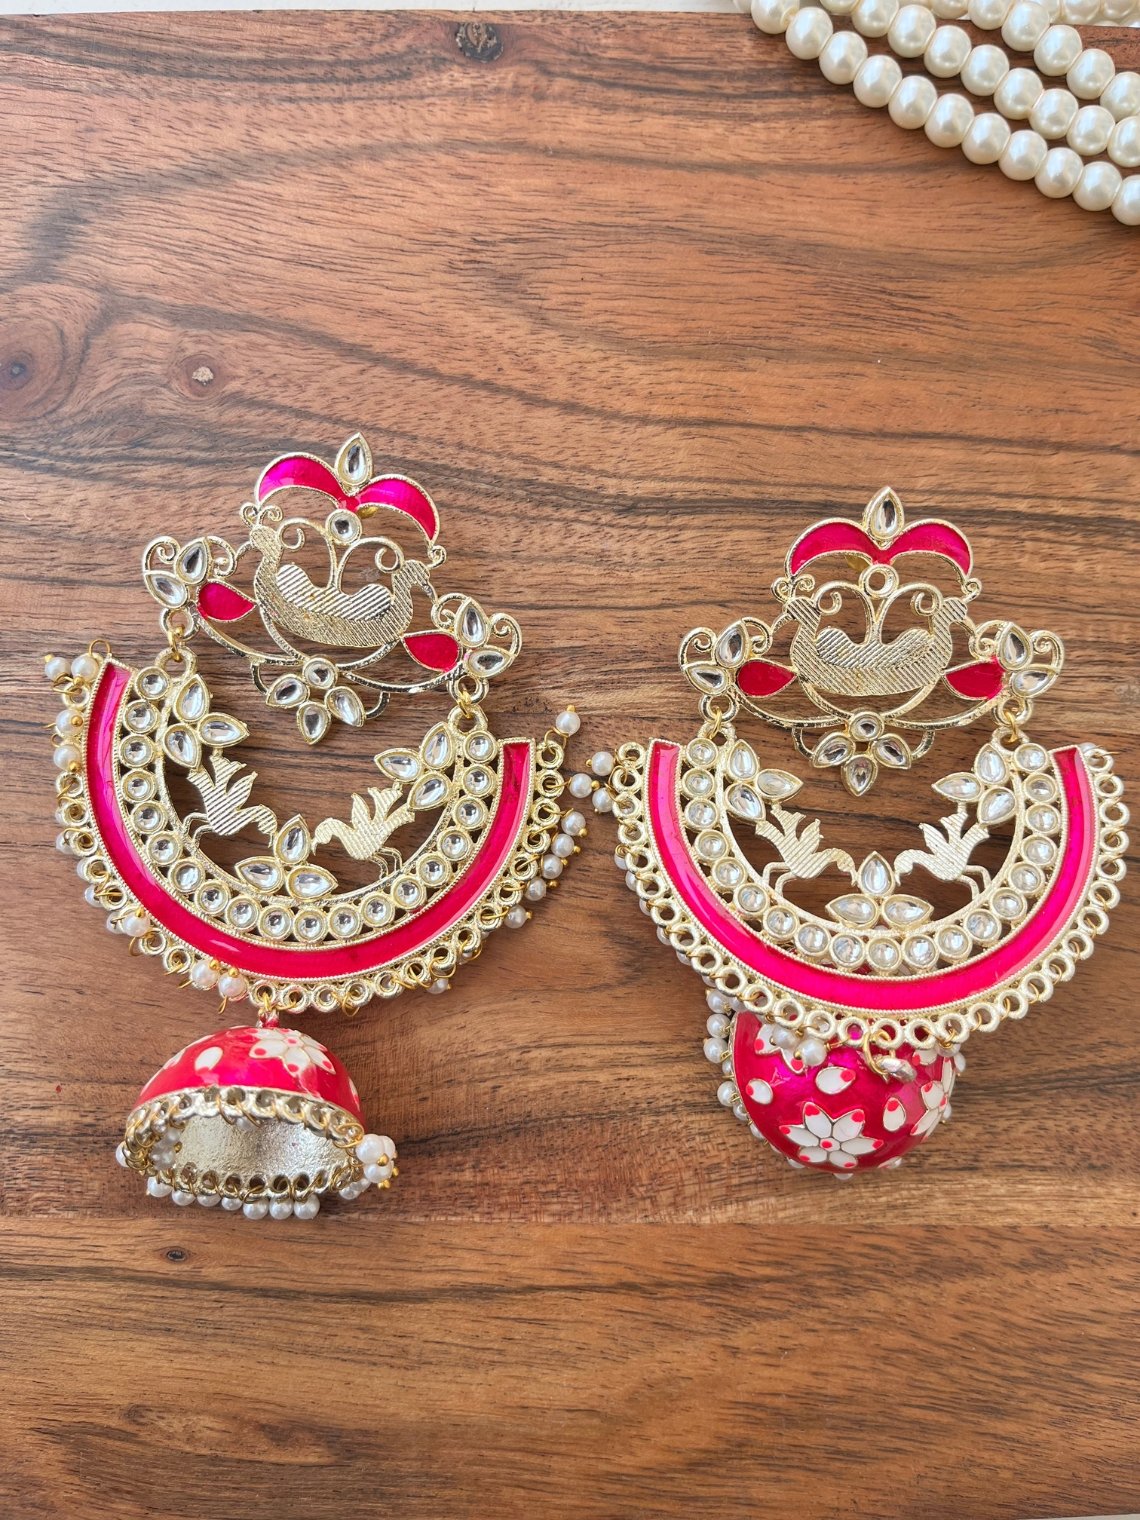 Chandbali Handcrafted Earrings - Chowkhat Handicraft